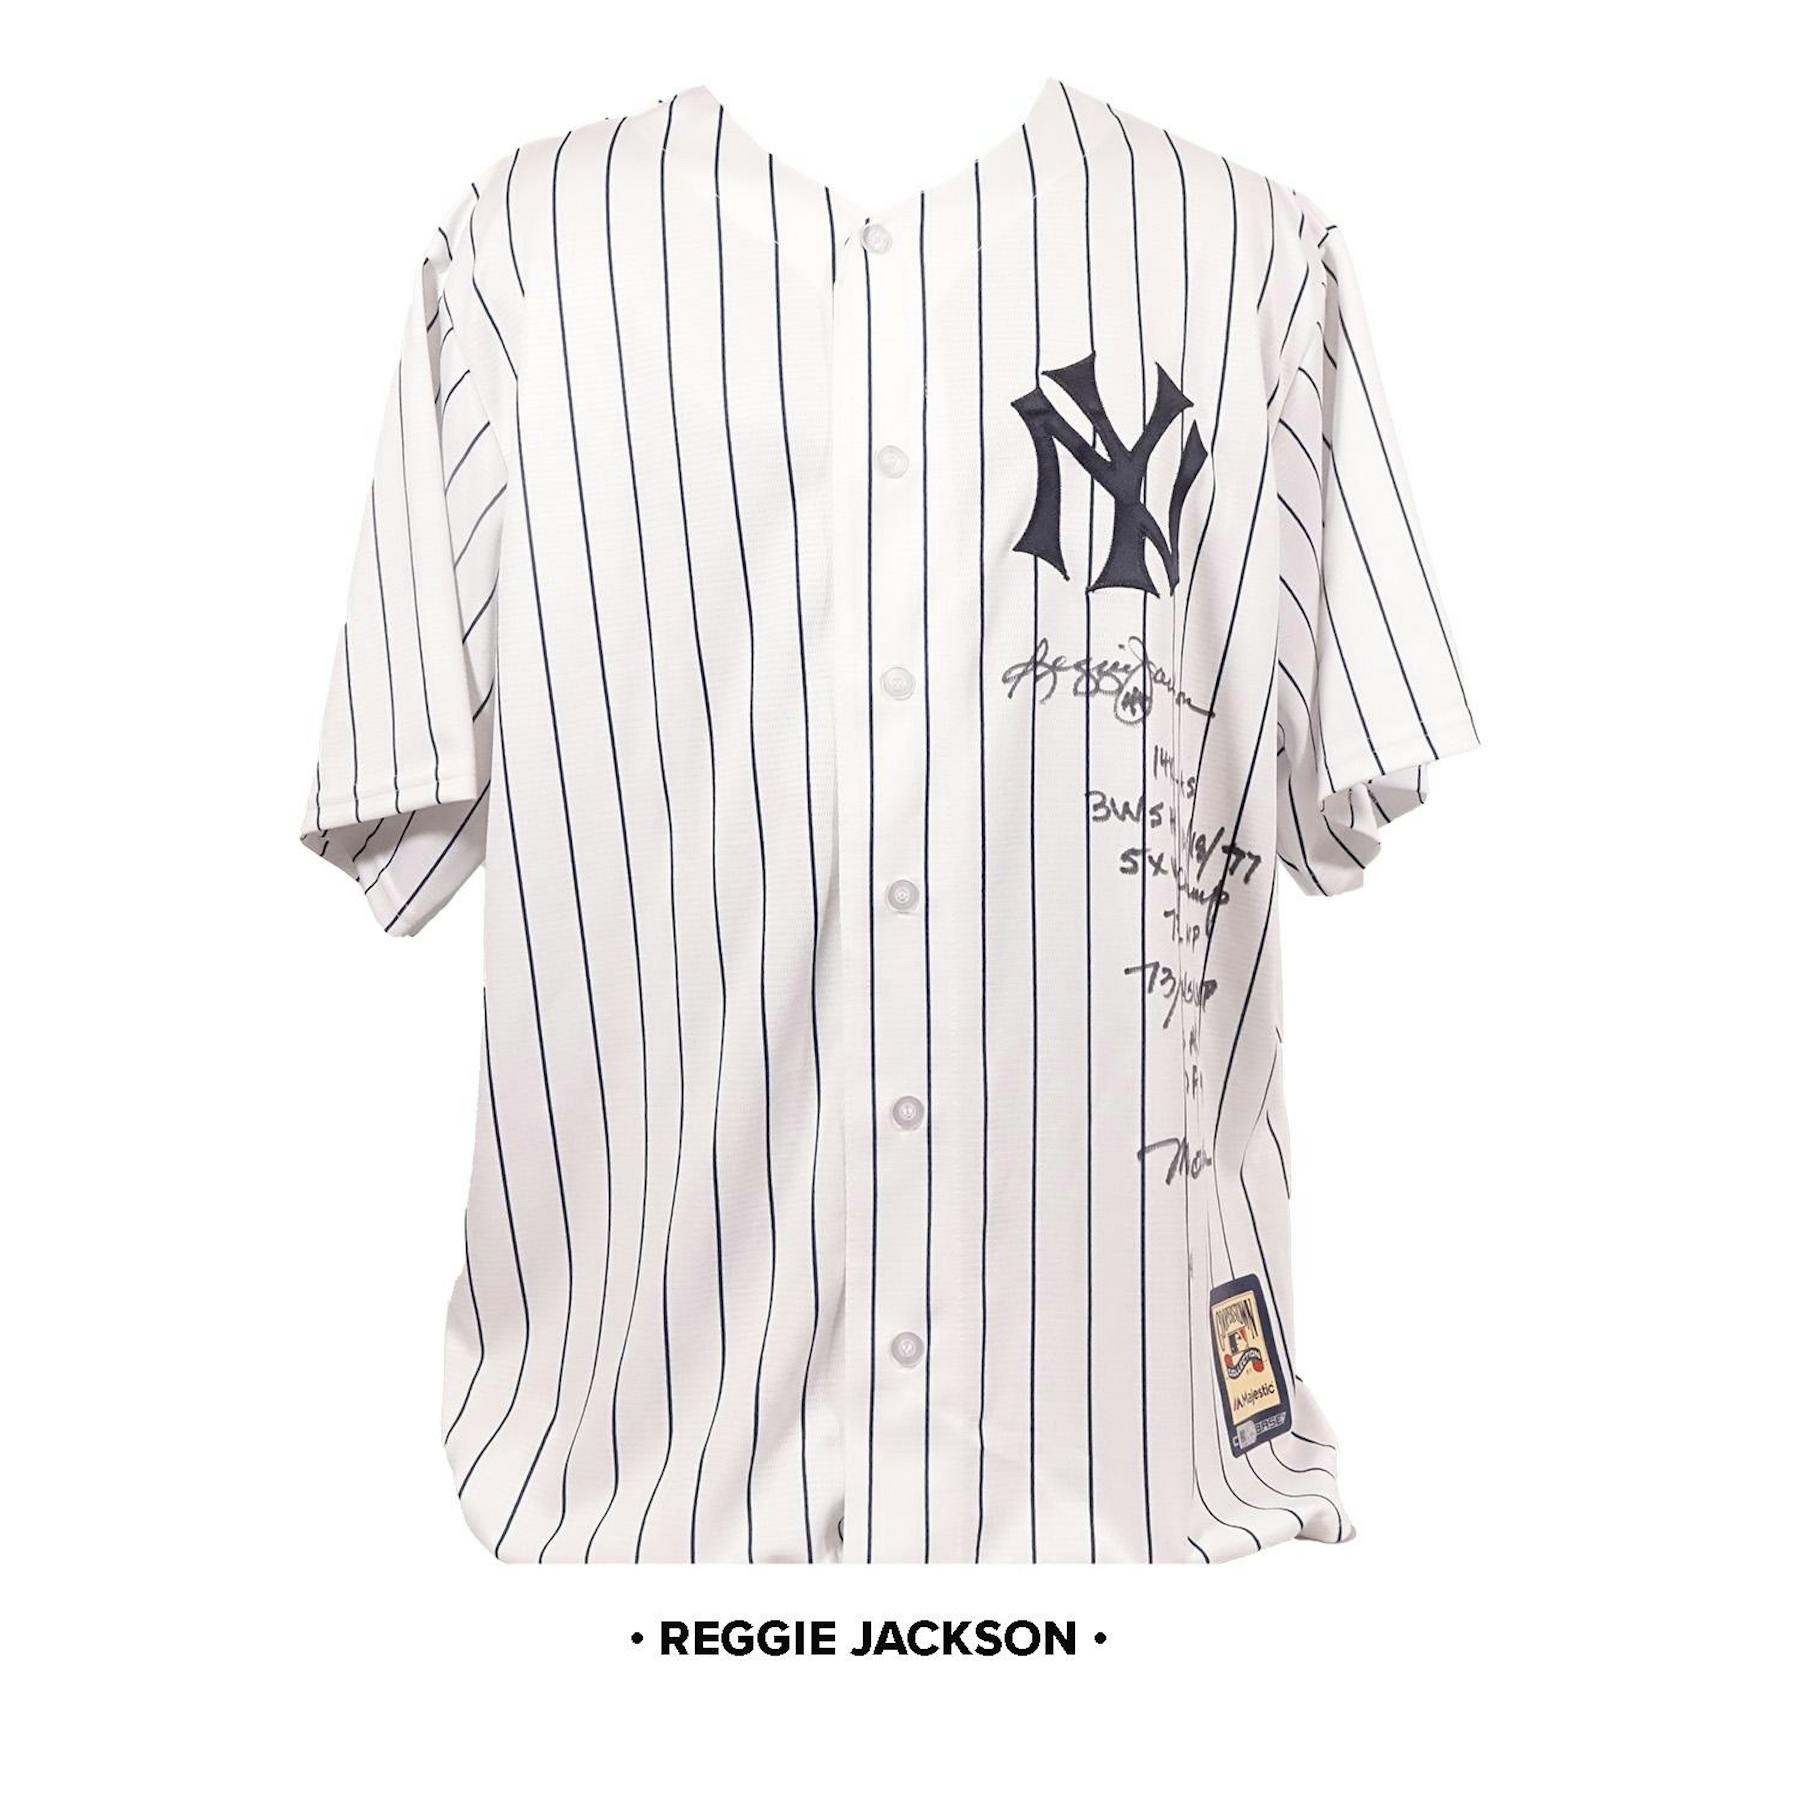 Gary Sheffield New York Yankees Autographed 8 x 10 Hitting